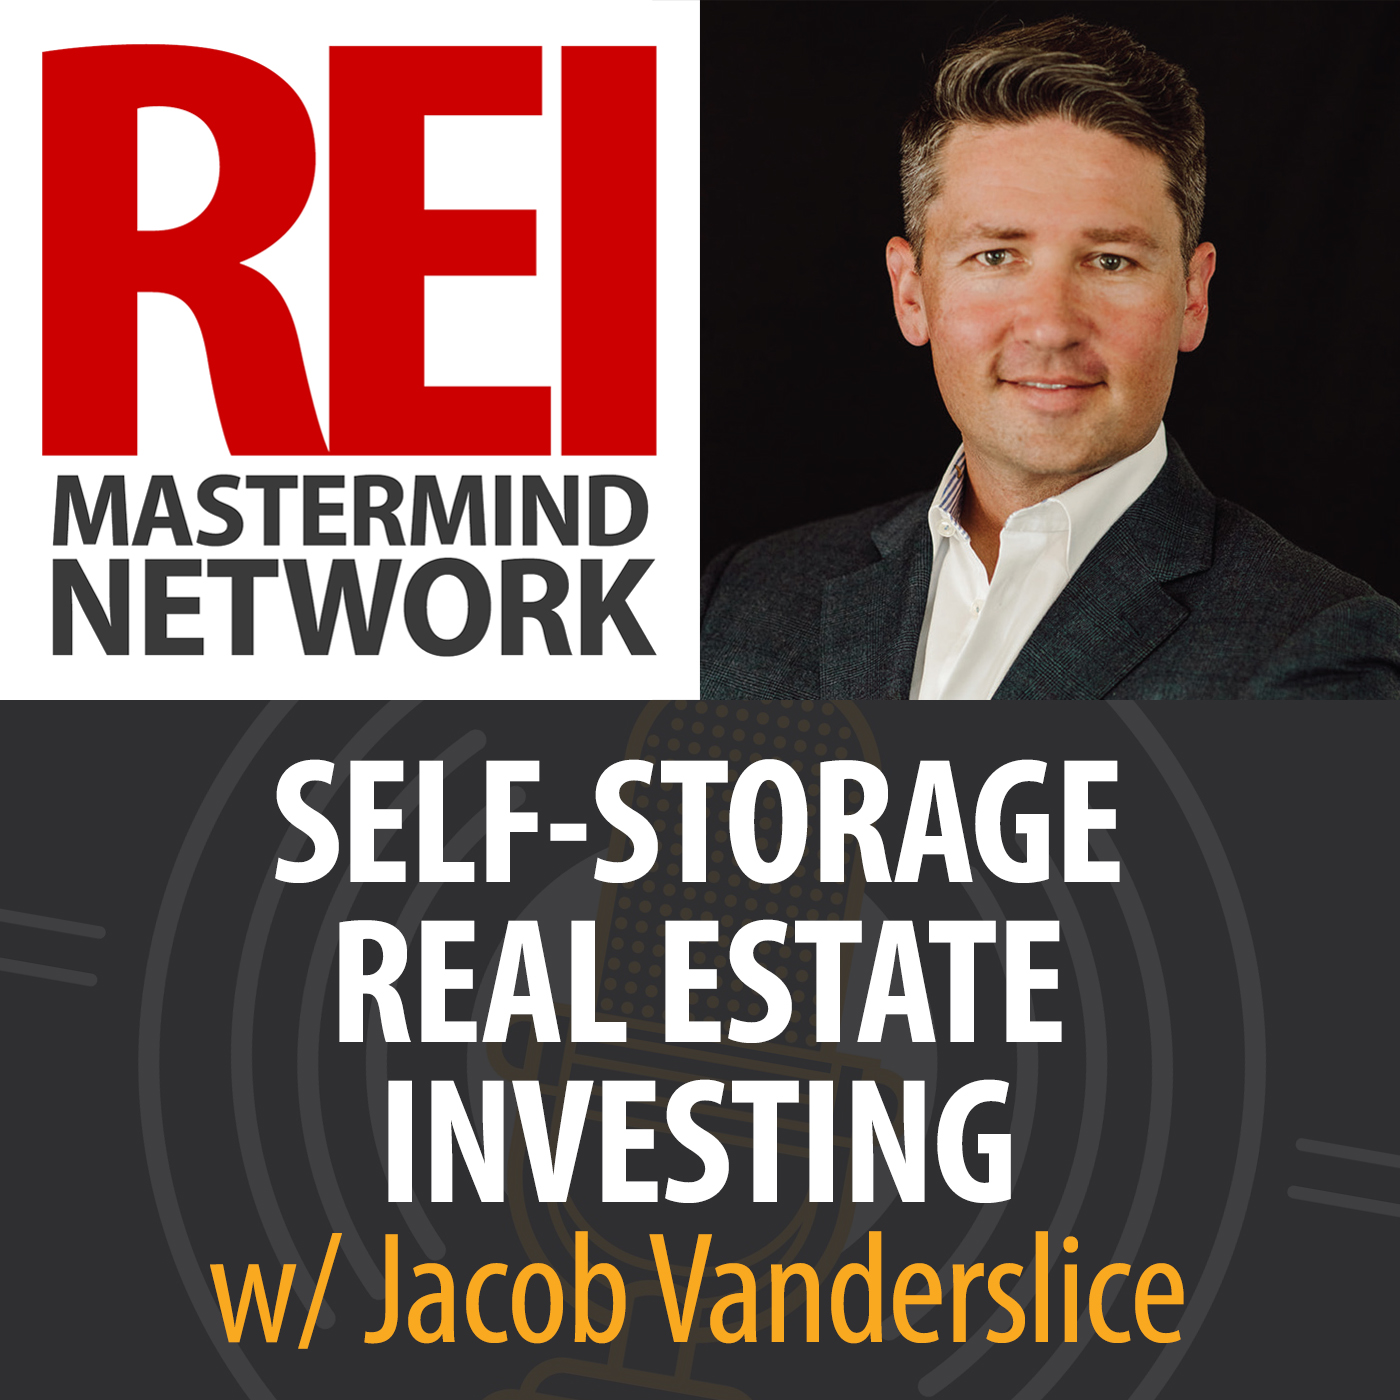 Self-Storage Real Estate Investing with Jacob Vanderslice Image